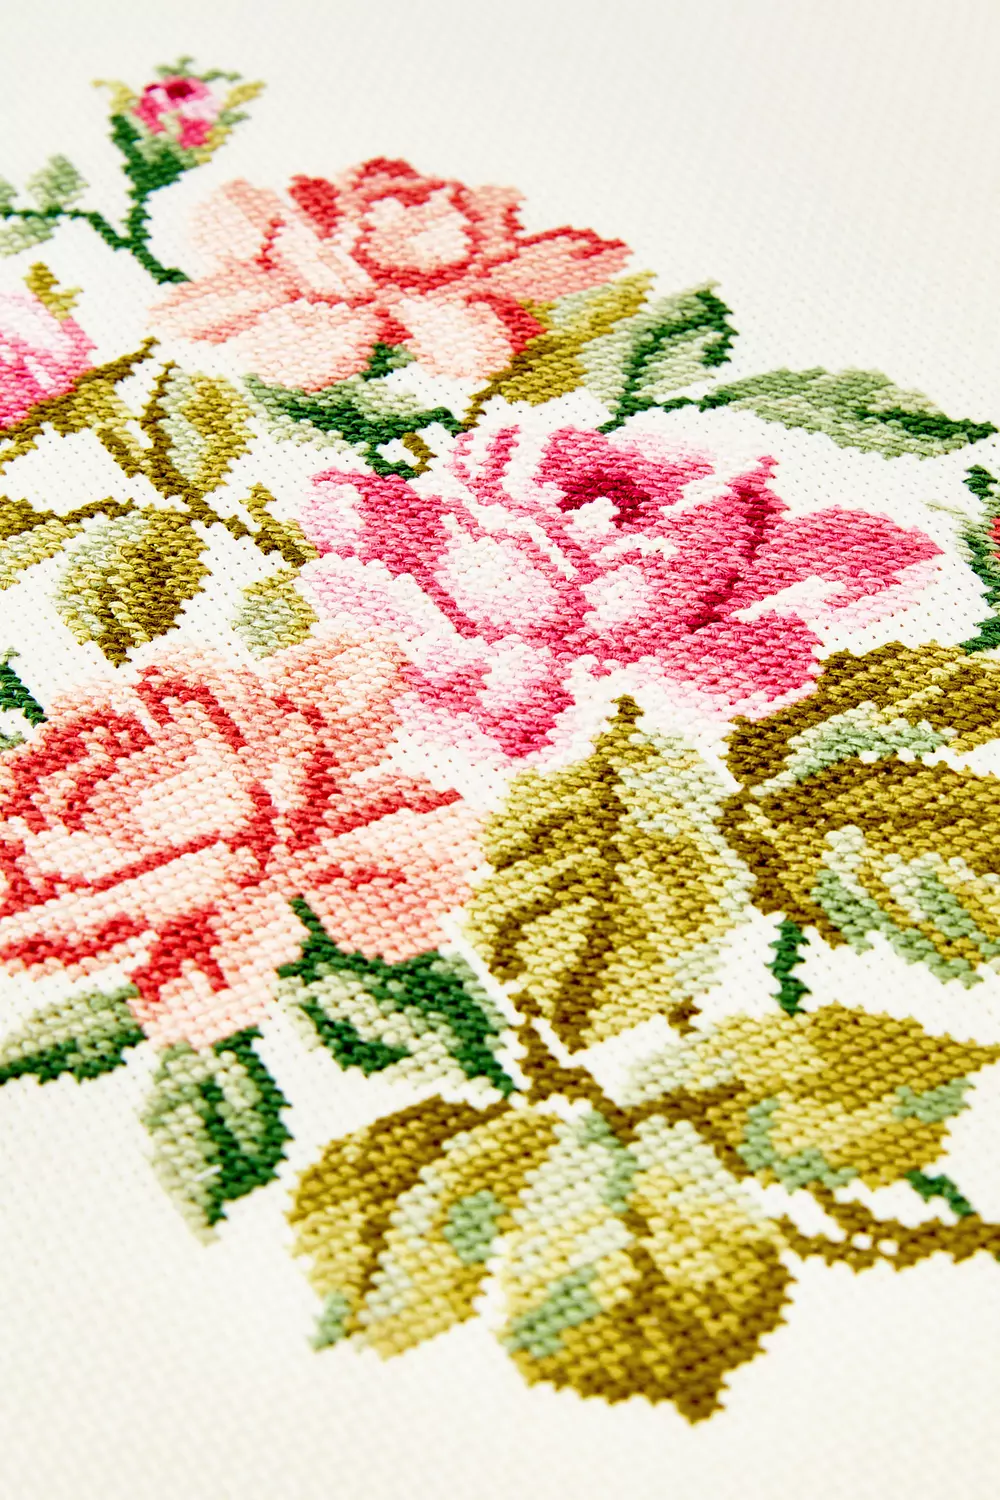 White Cross Stitch Aida 11 Count Fabric Cotton Stitching Embroidery Cloth  Diy Precut Cross Stitch Aida Cloth 11 Count Needlework - Embroidery -  AliExpress